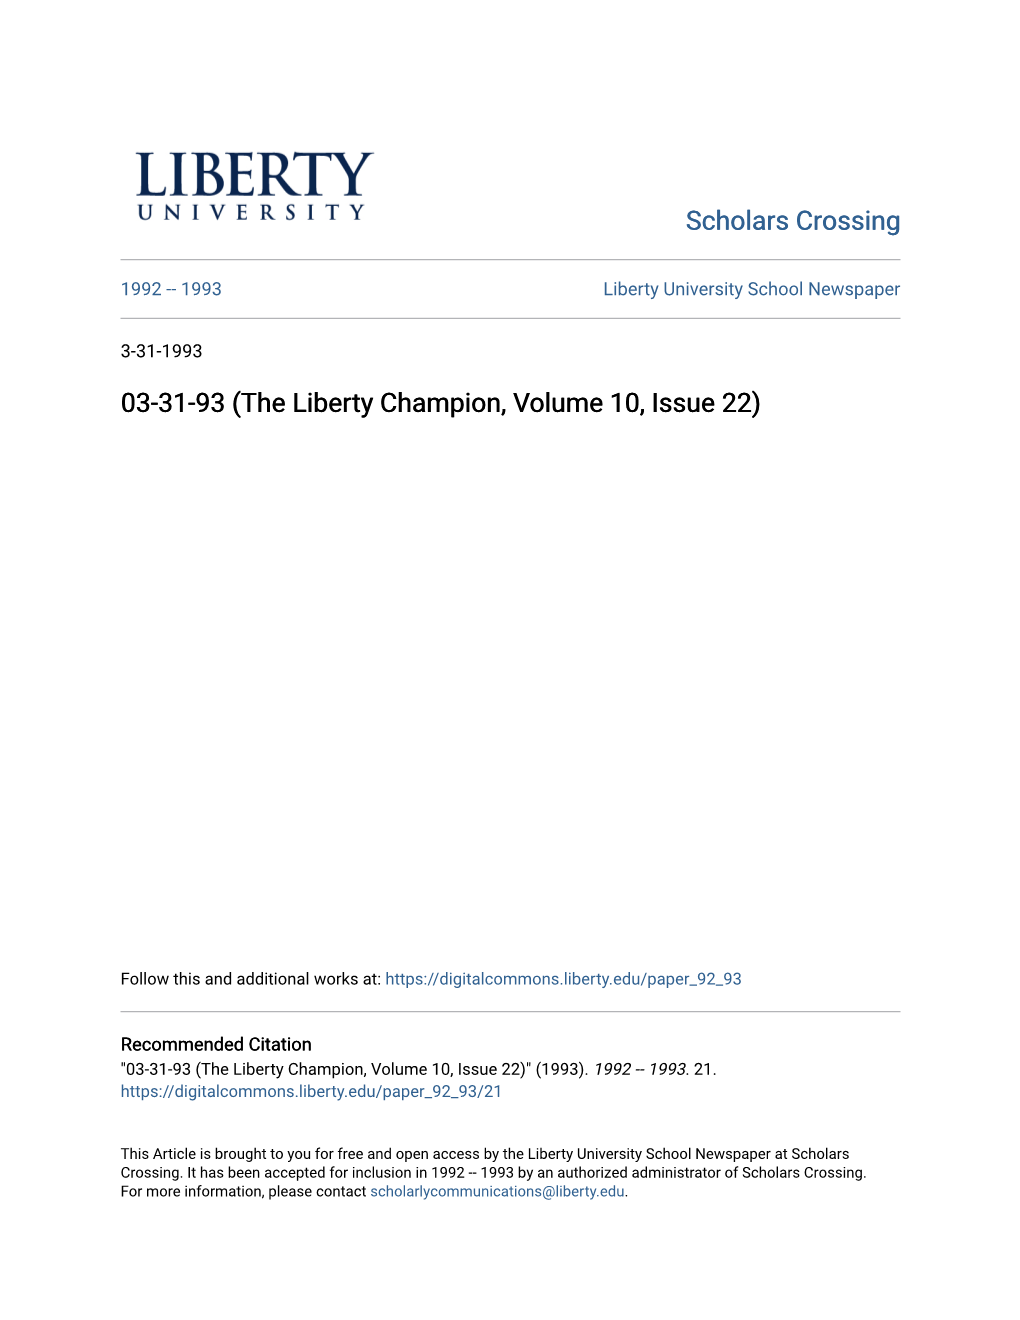 03-31-93 (The Liberty Champion, Volume 10, Issue 22)